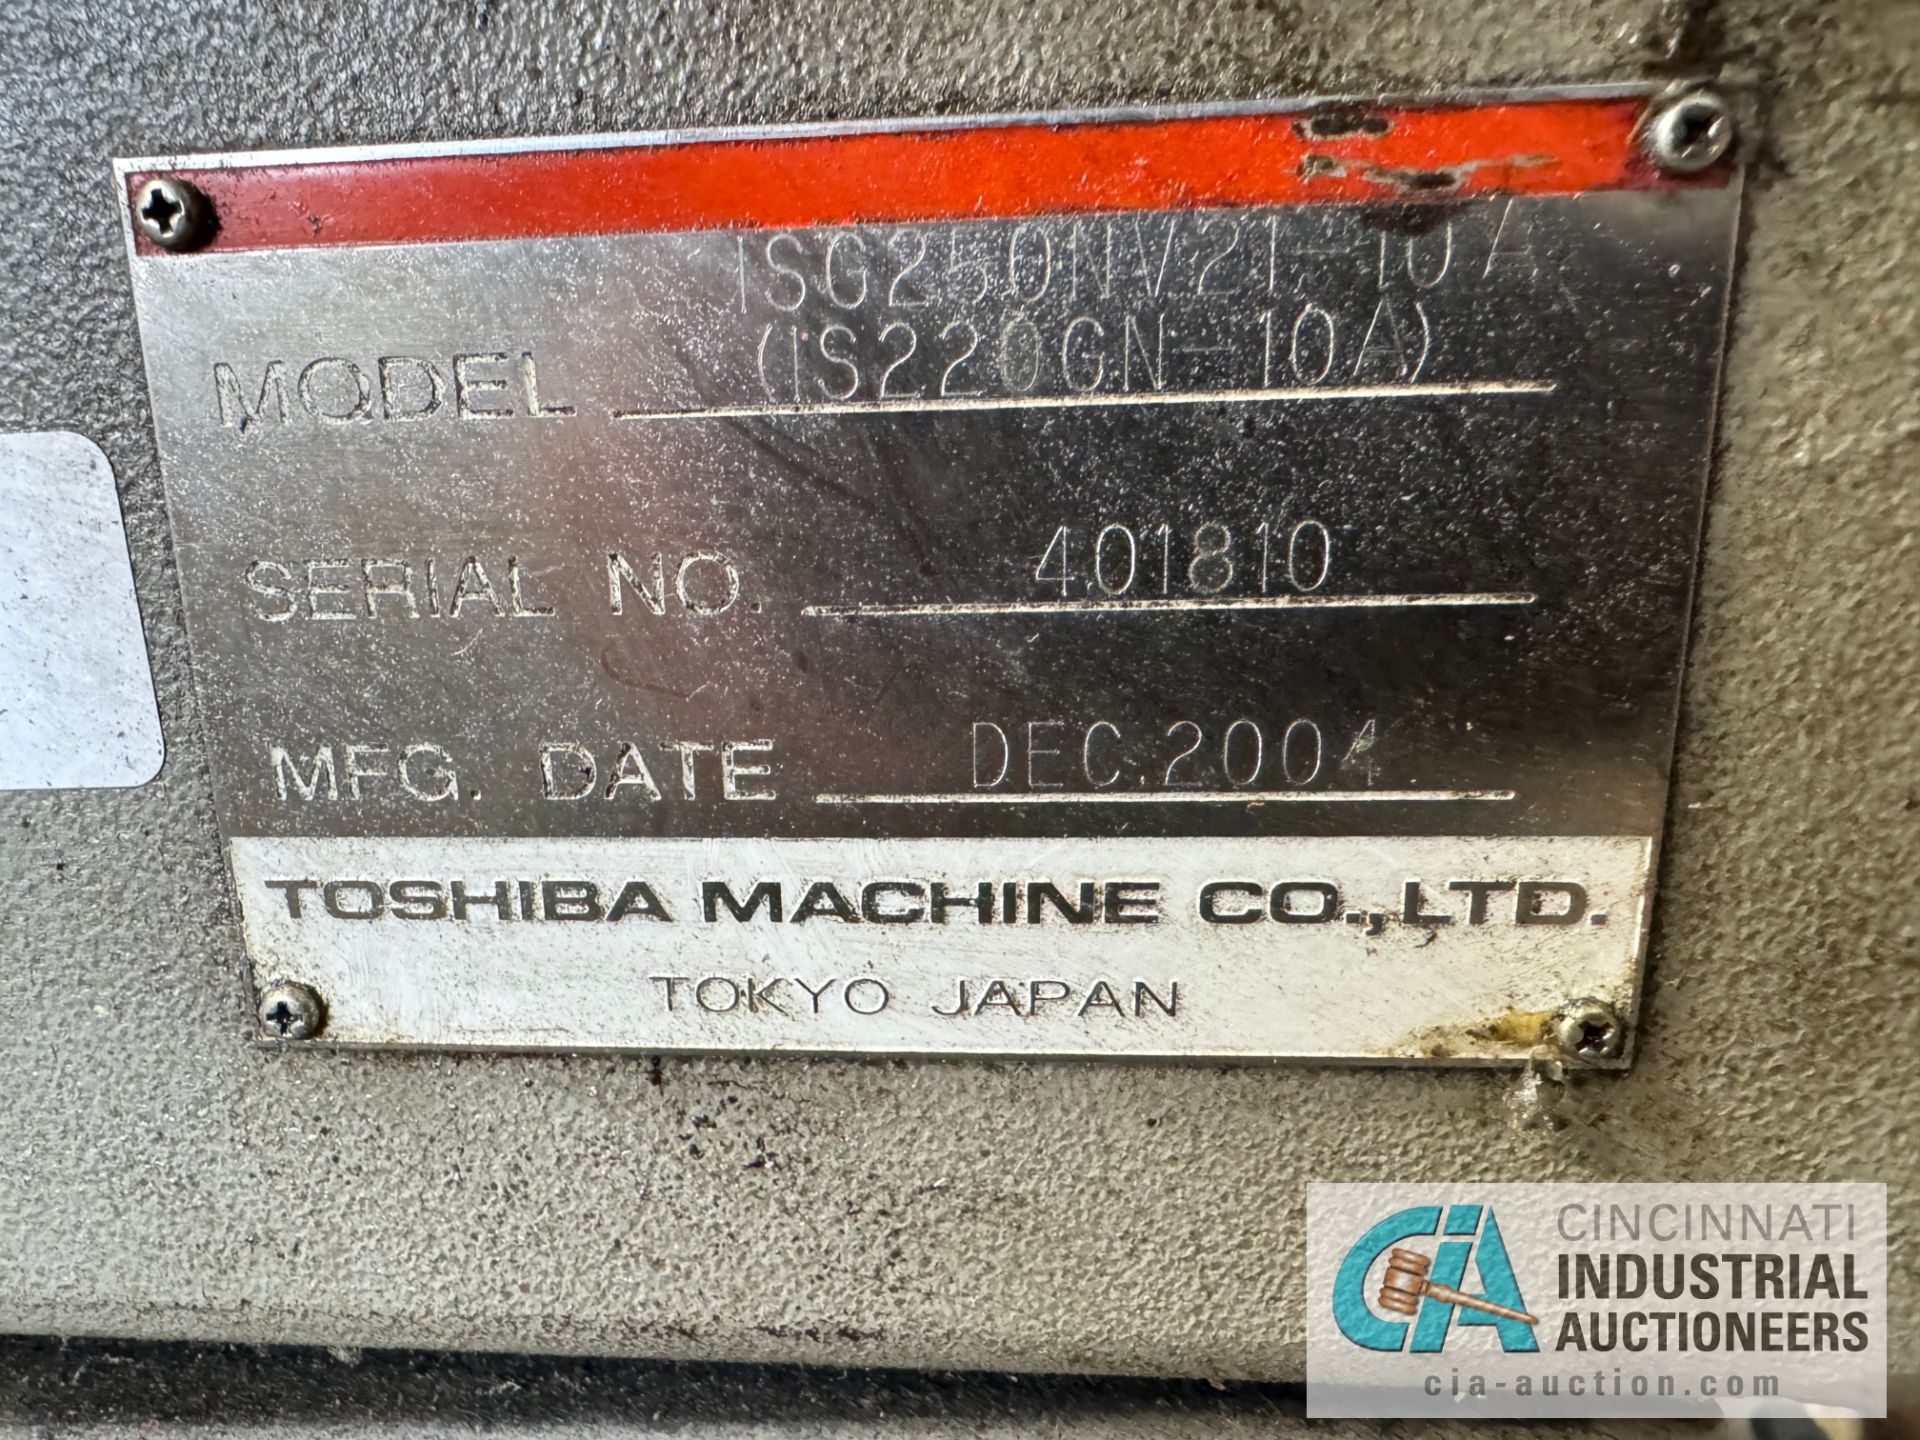 Toshiba Model ISG250NV21, 243-Ton x 14.3-oz, Injection Molding Machine (2004), s/n 401810, Updated - Image 8 of 11